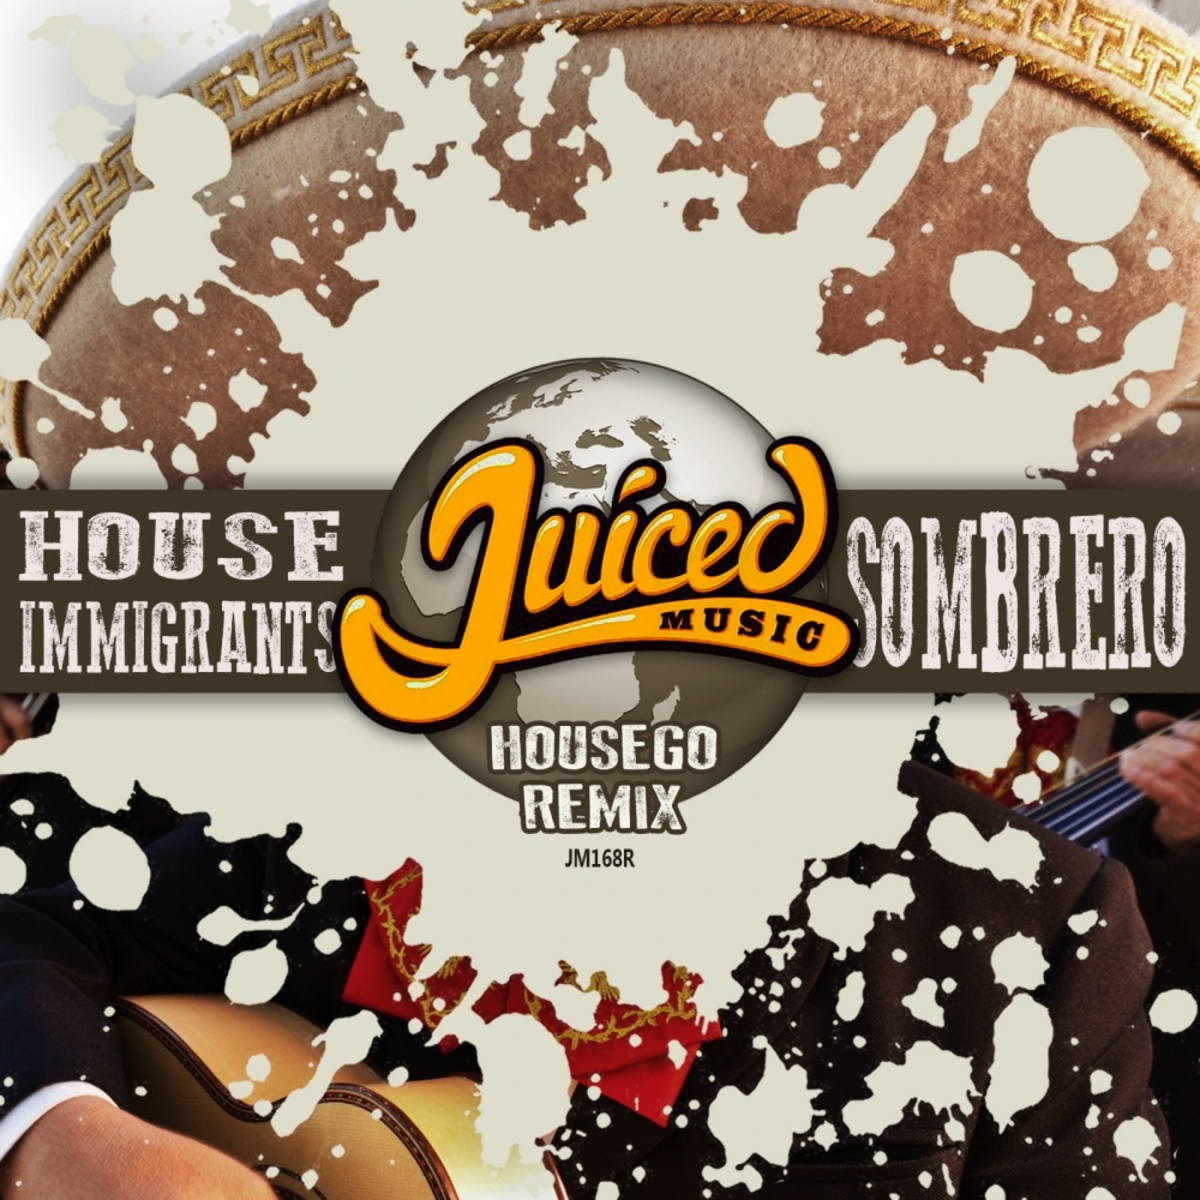 House Immigrants - Sombrero (Housego Remix) / Juiced Music